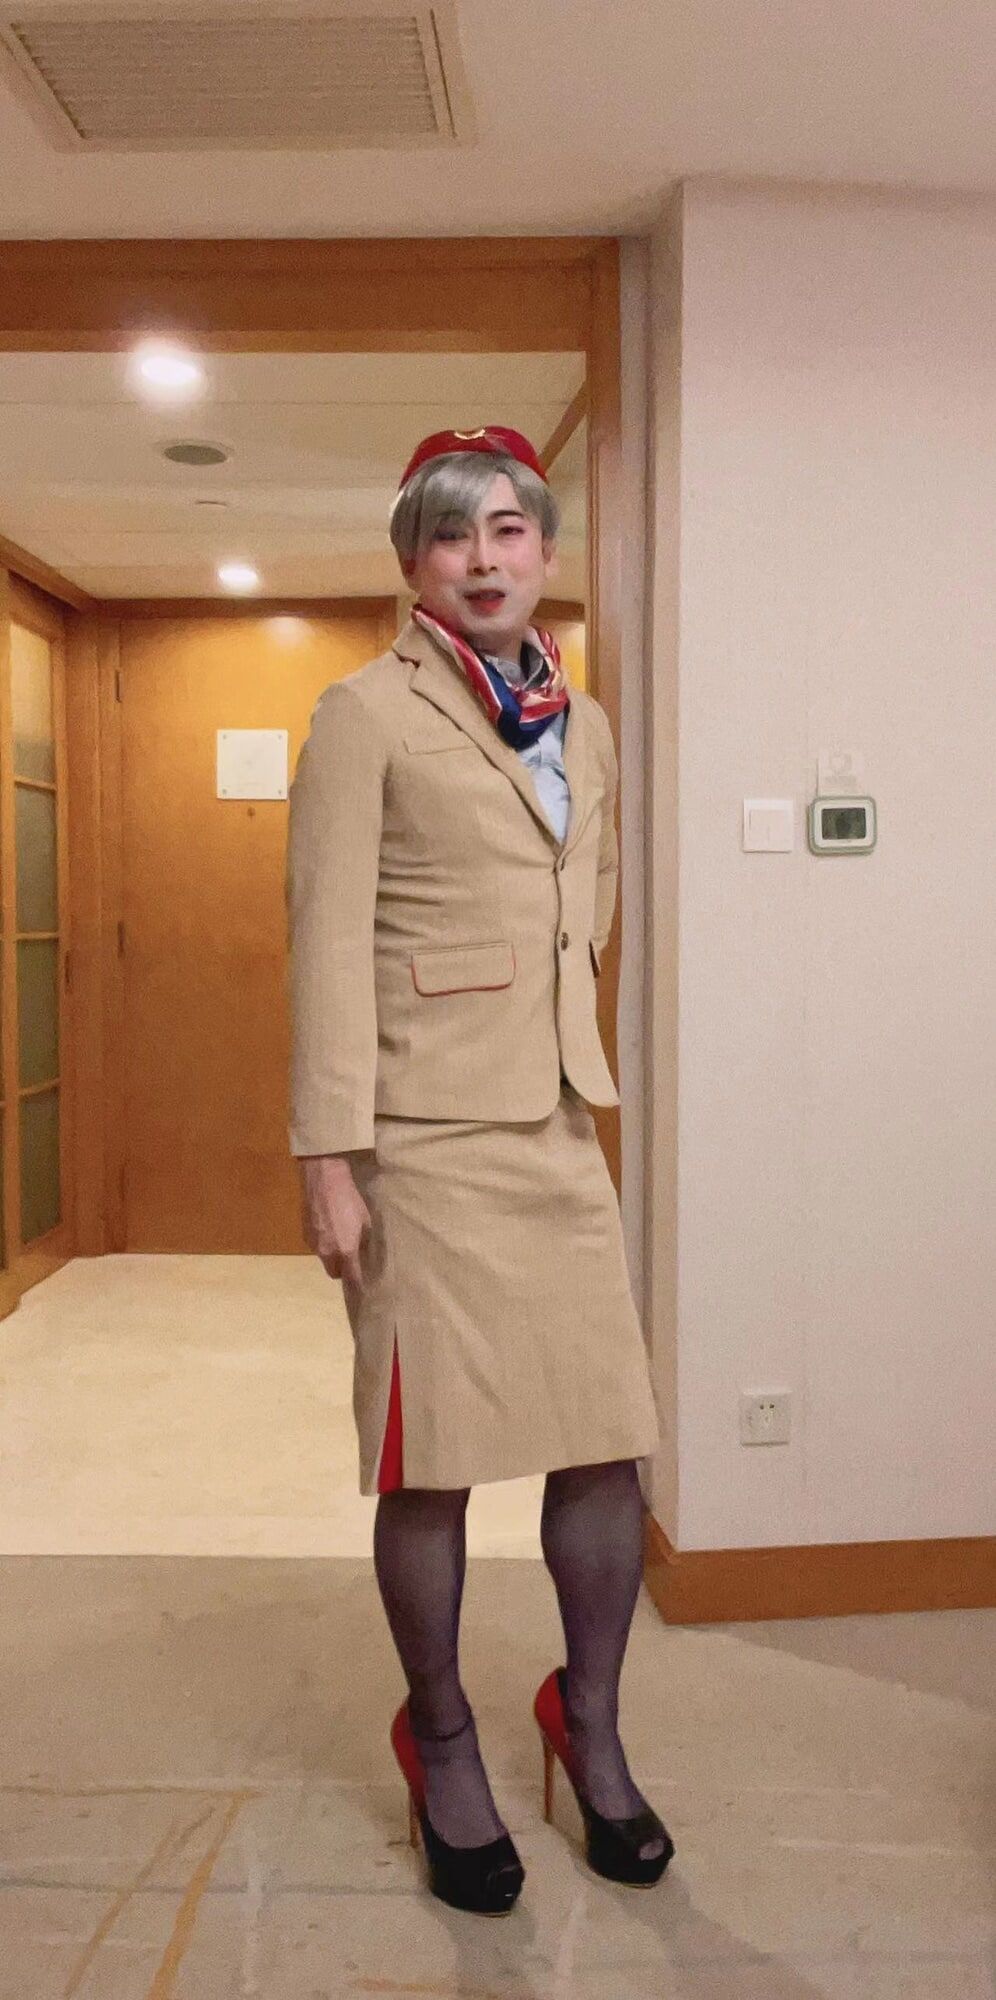 Asian femboy sissy in Emirates flight attendant dress #17